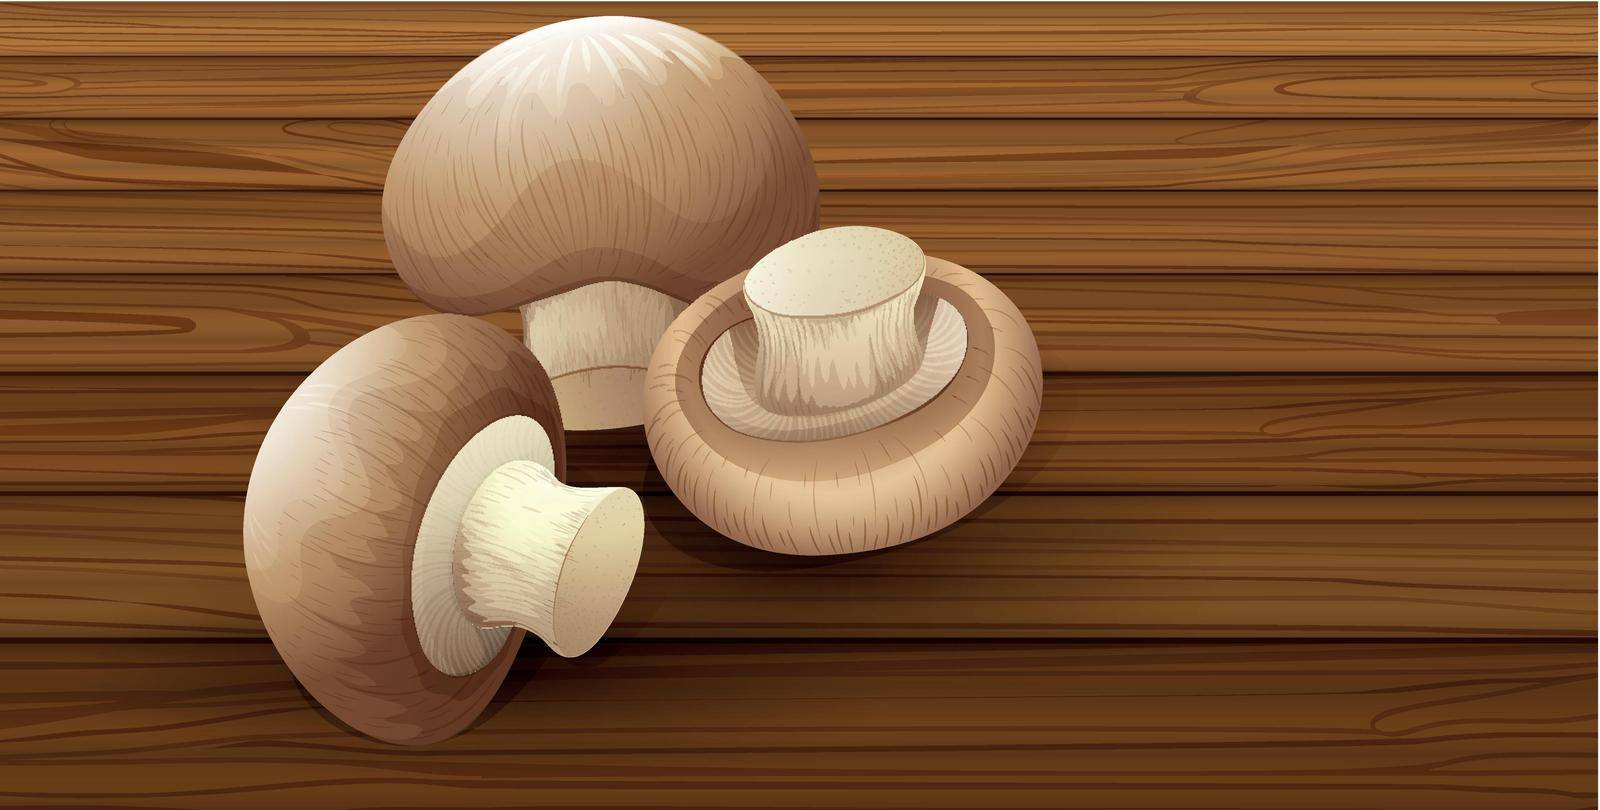 Edible Mushroom on Wooden Background illustration